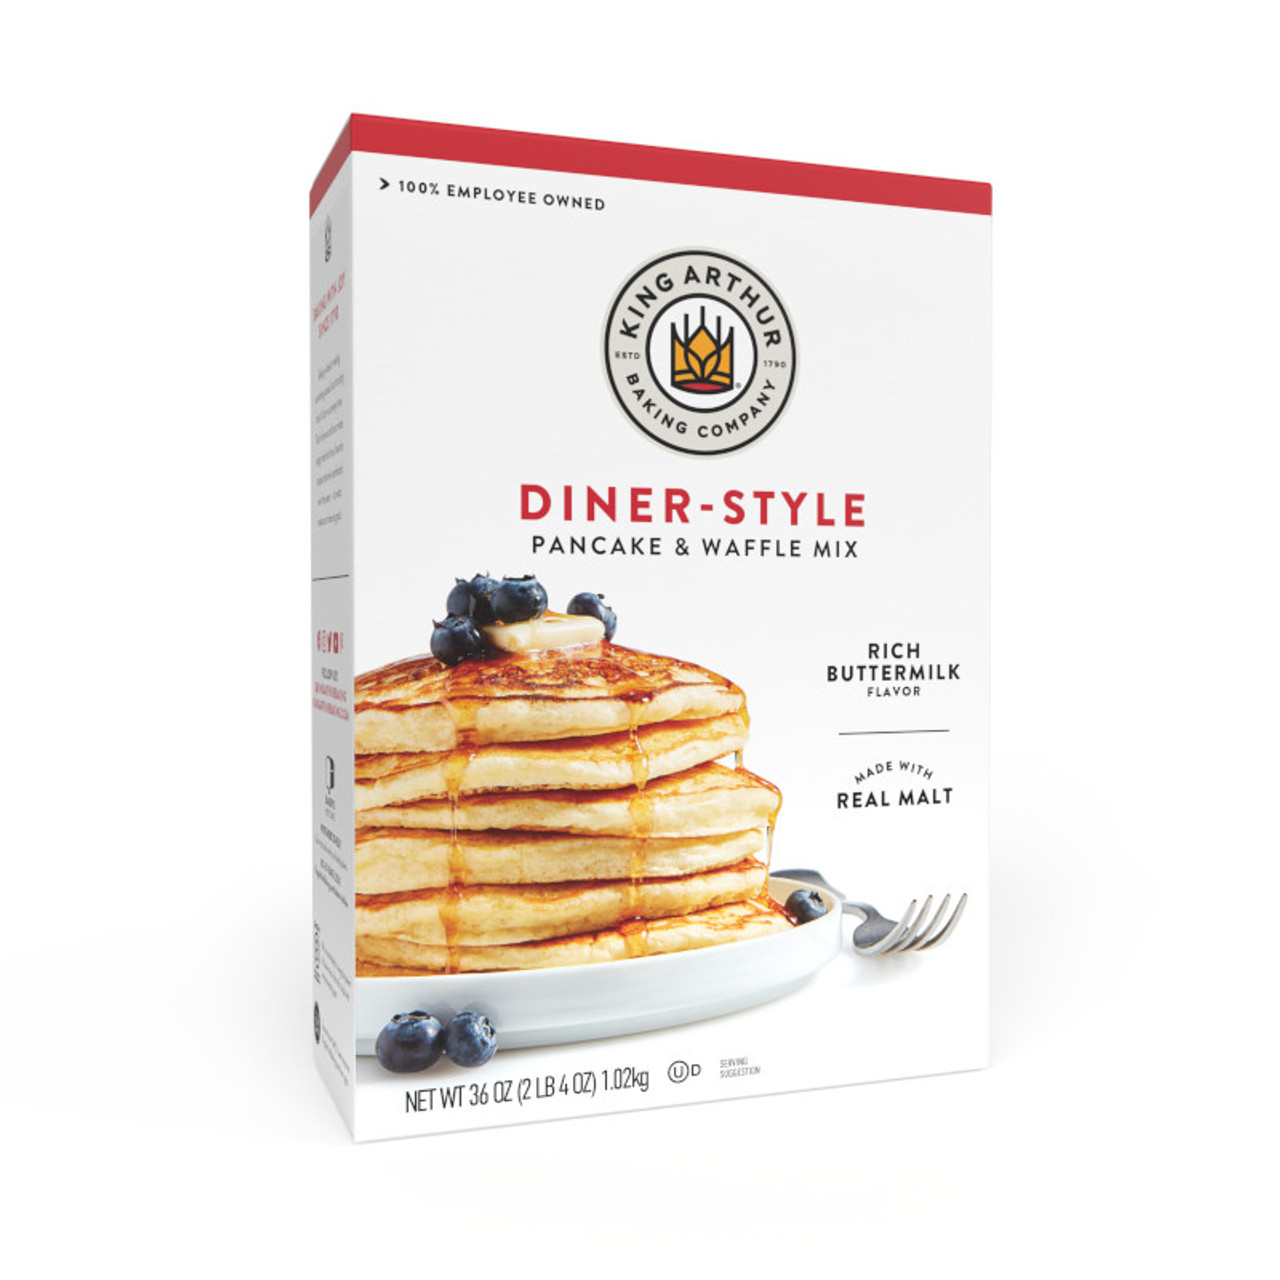 Pancake & Waffle Mix - Original